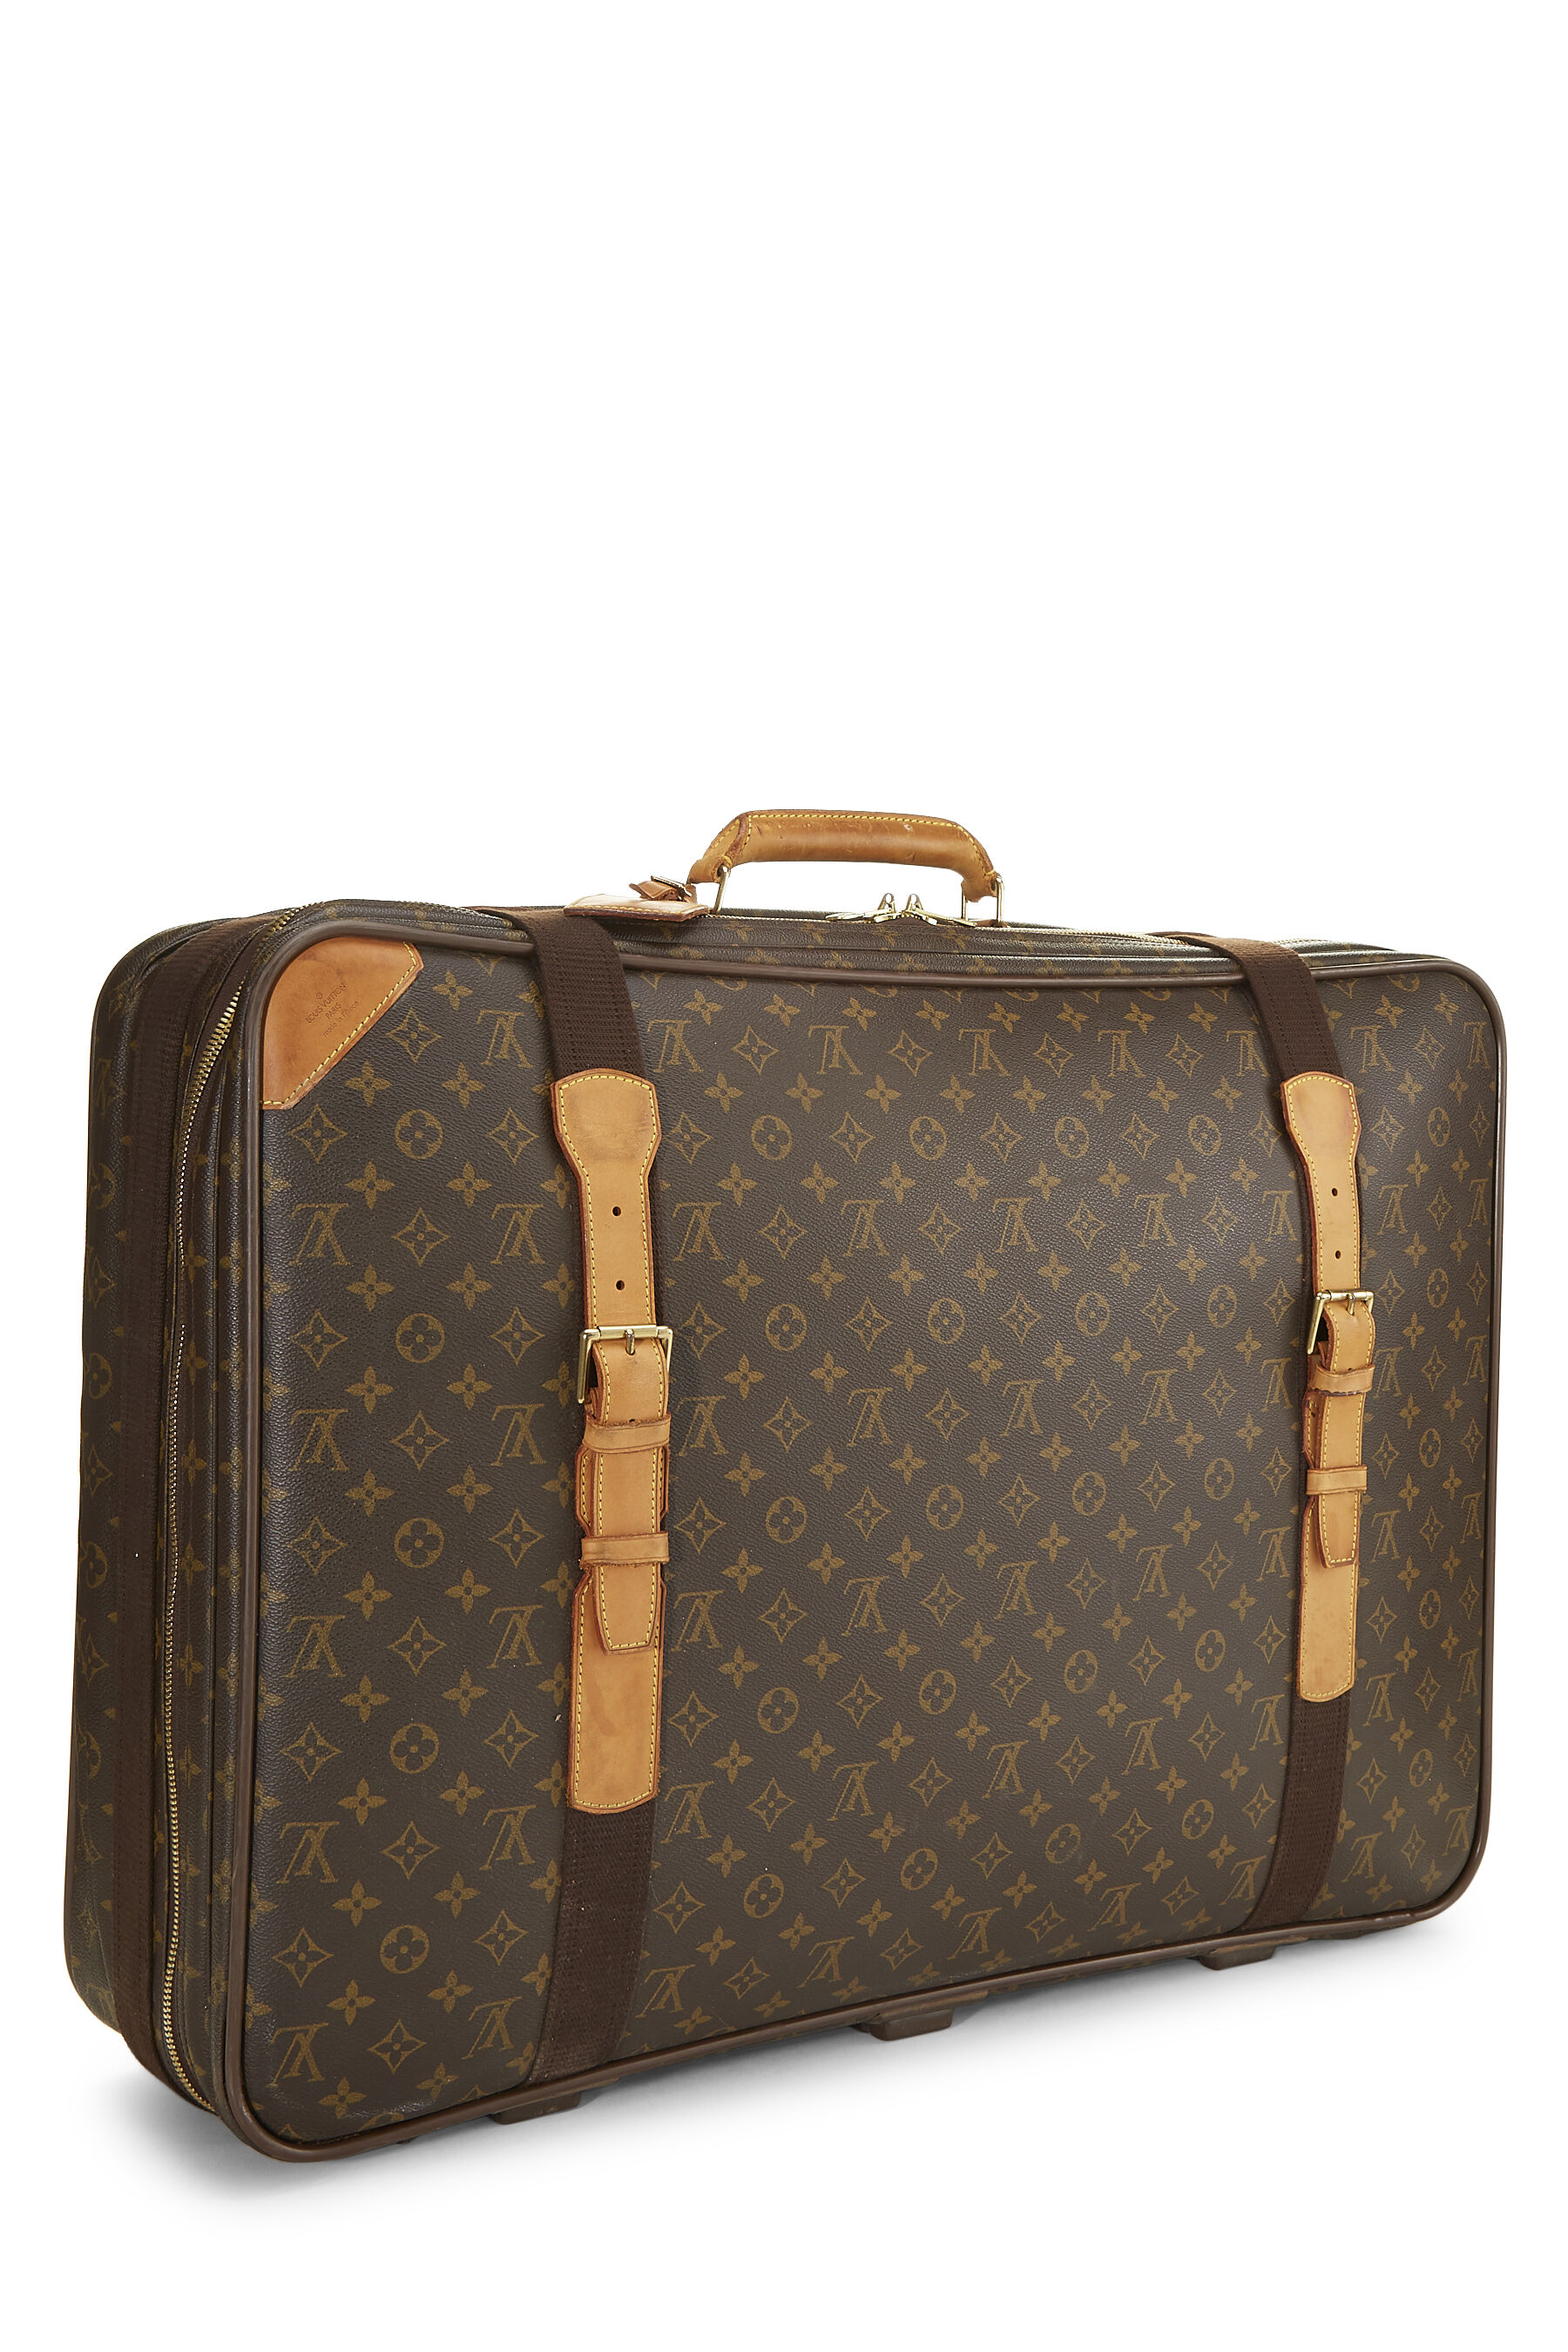 Louis Vuitton Satellite 70 Monogram Canvas Suitcase on SALE